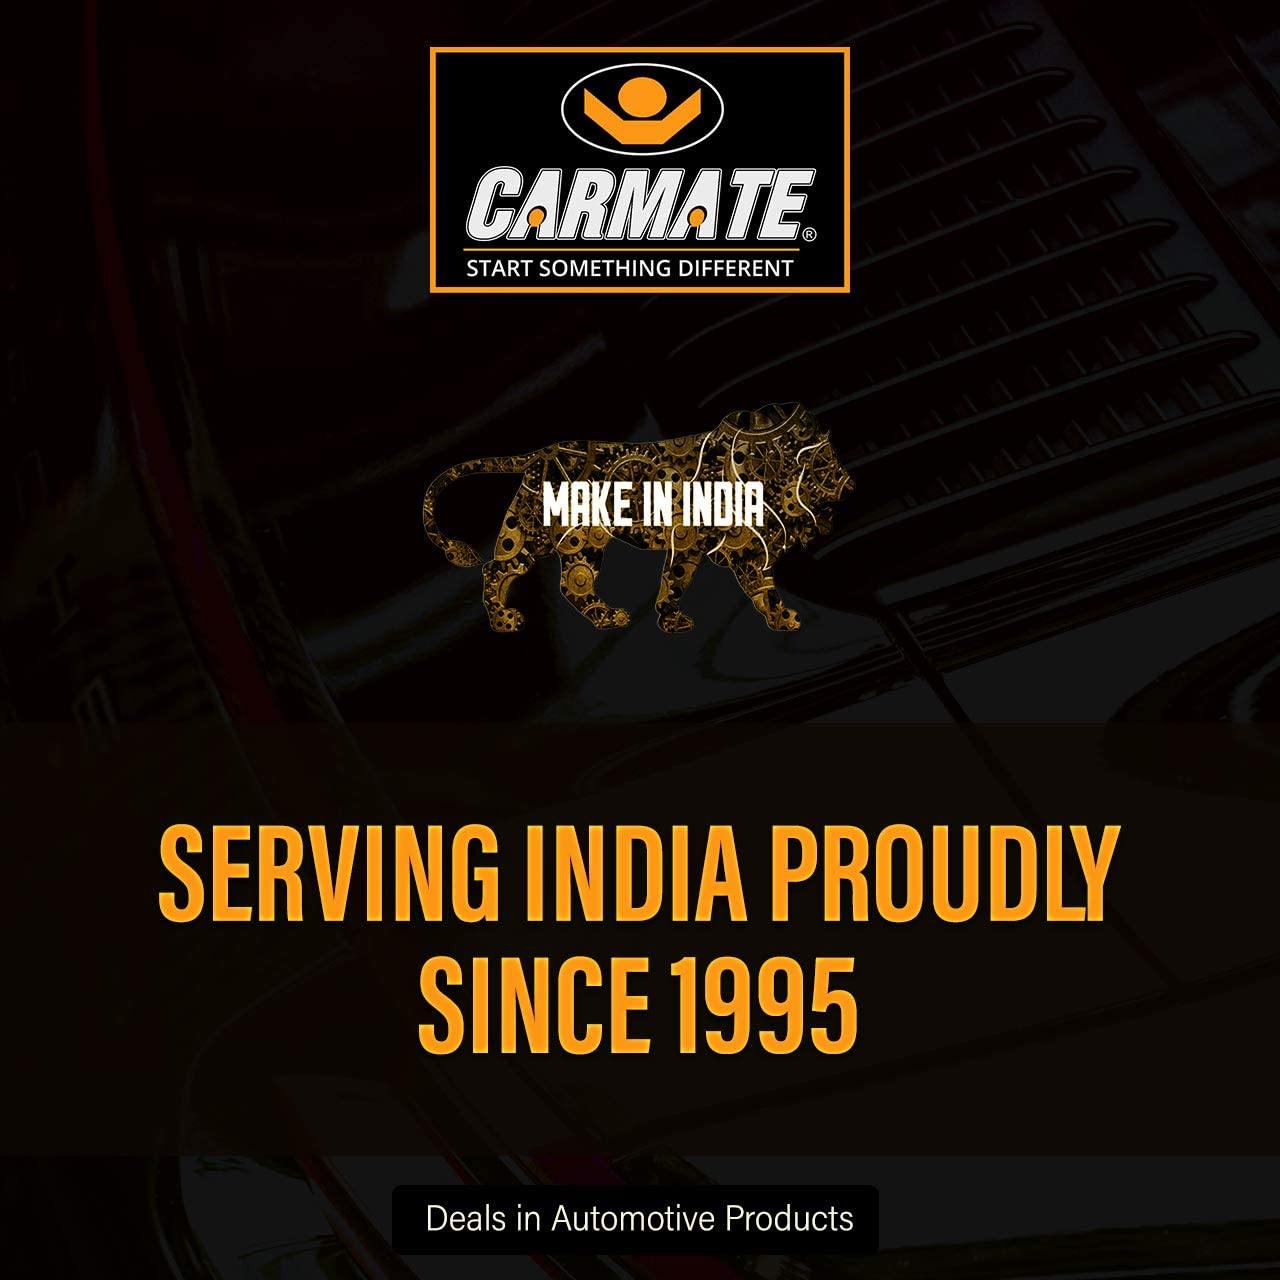 Carmate ECO Car Body Cover (Grey) for Chevrolet - Enjoy - CARMATE®